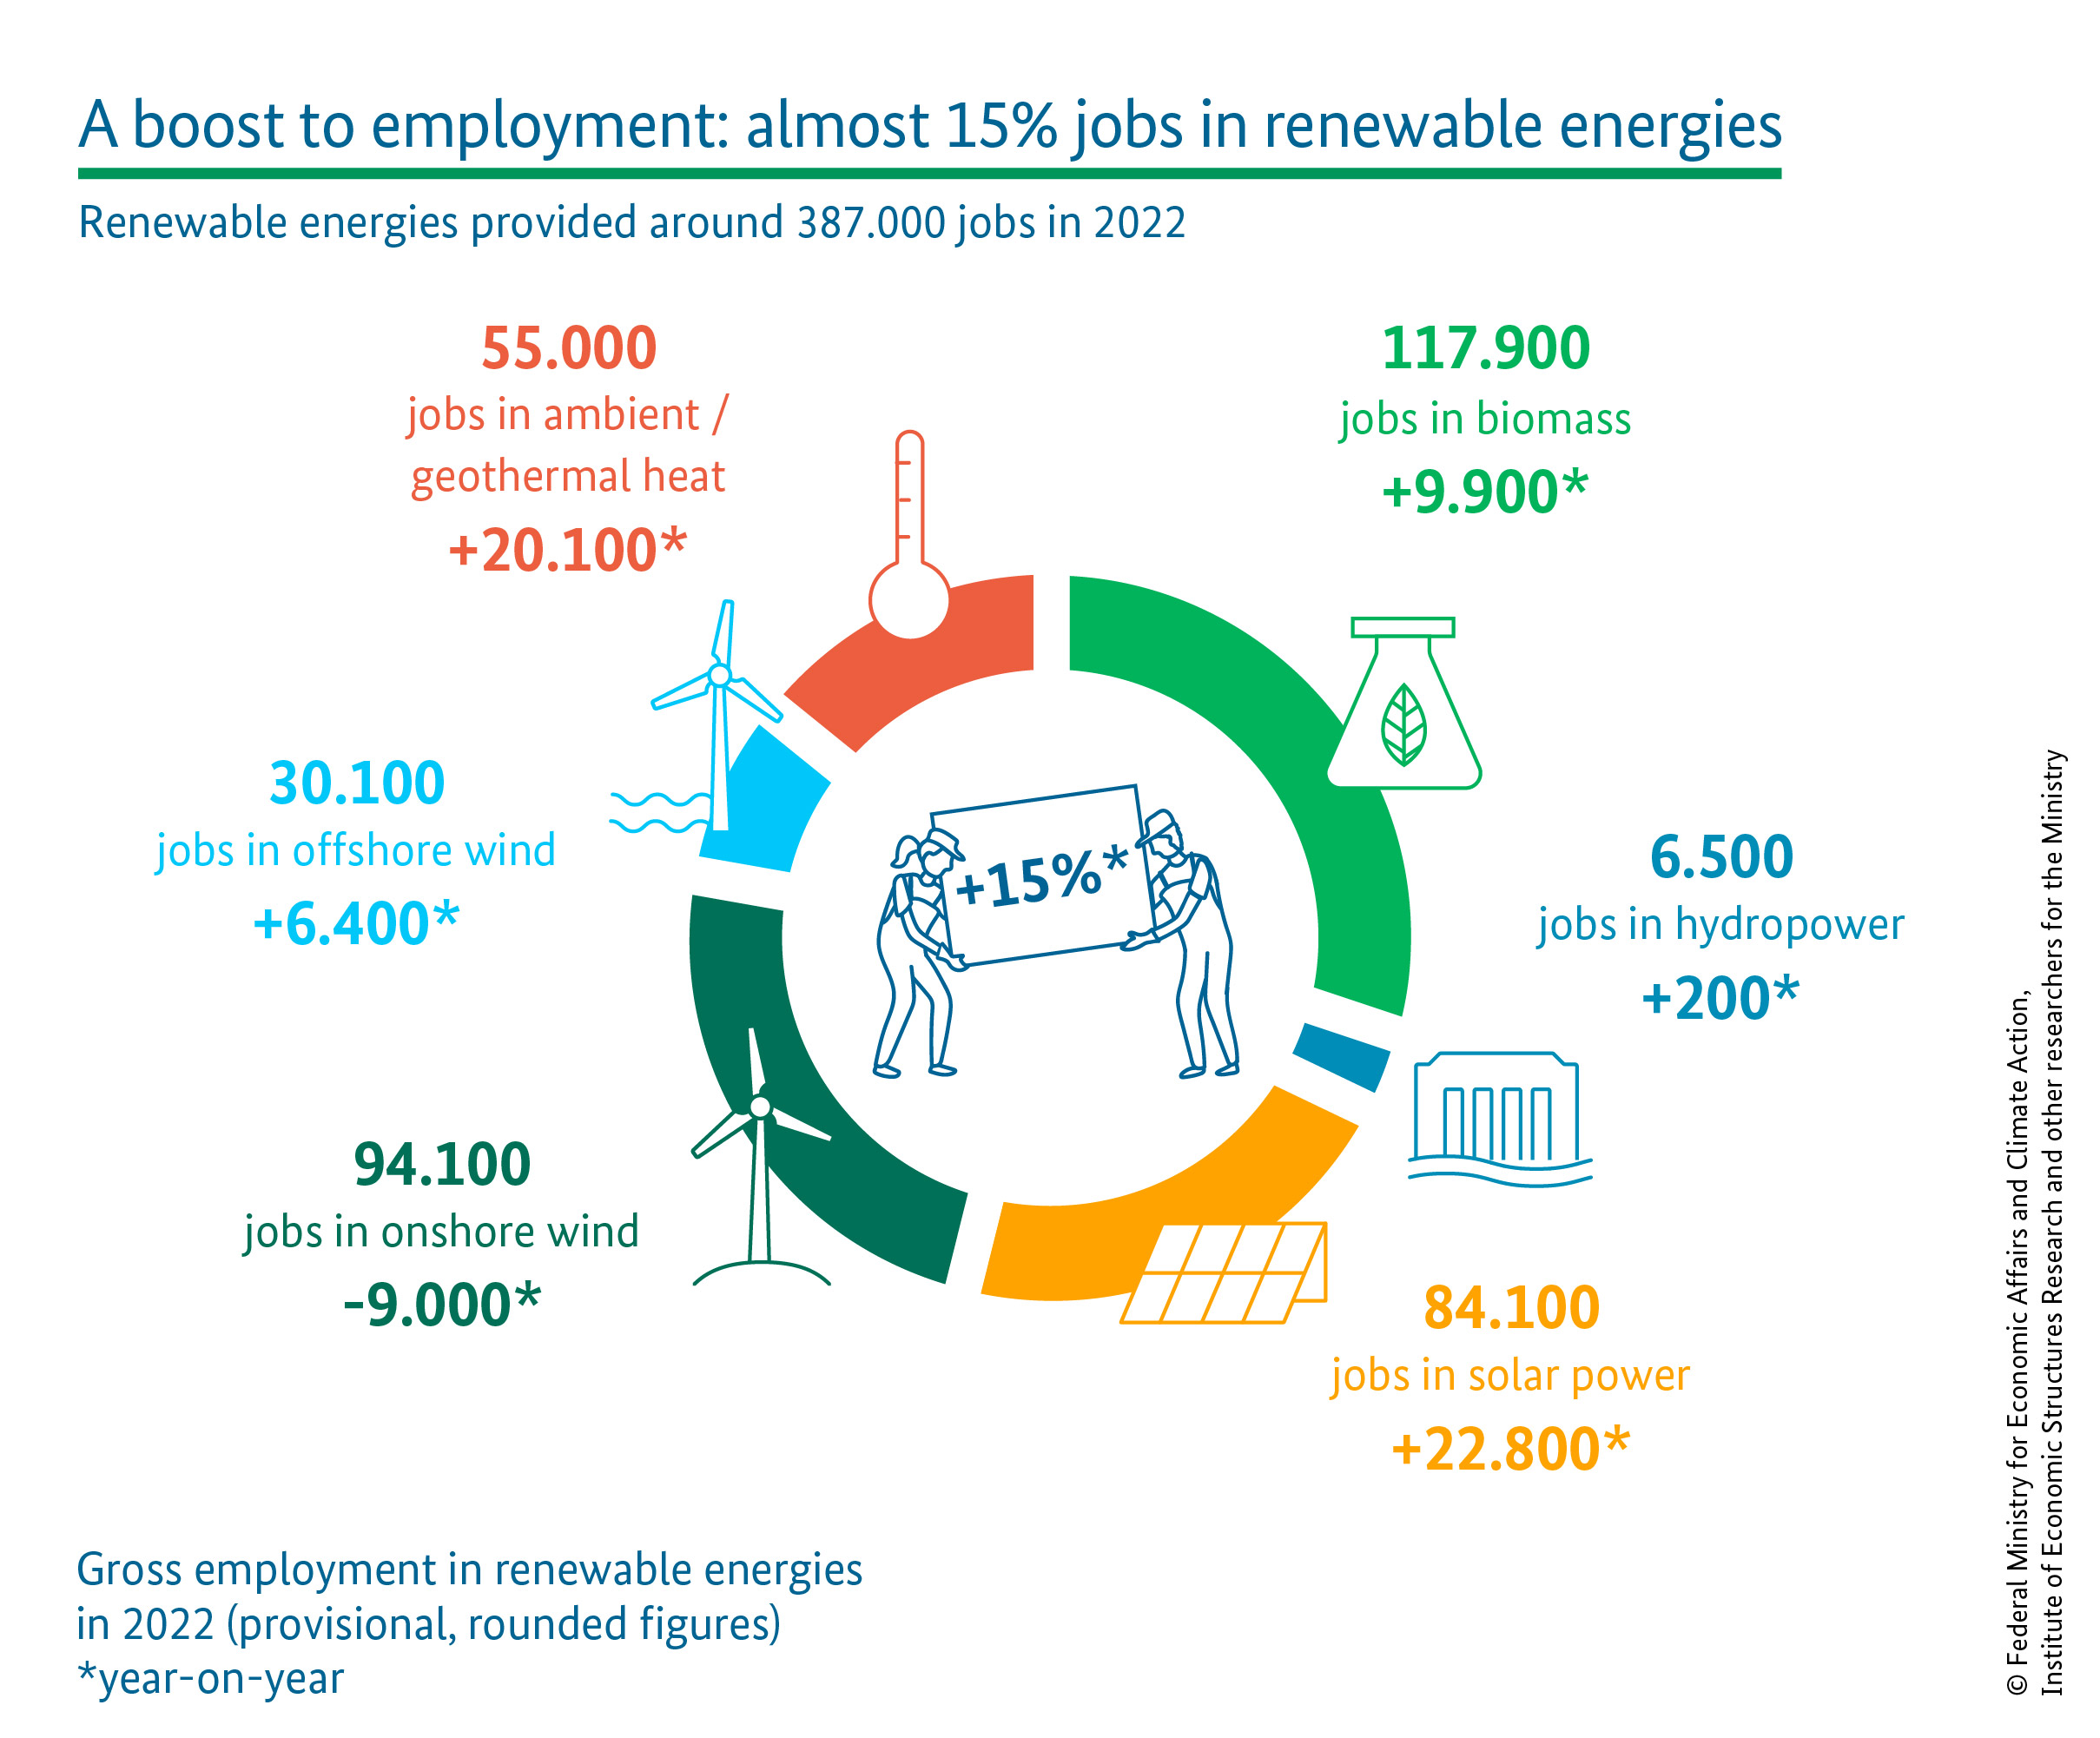 Renewable energies employed around 387,000 people in 2022